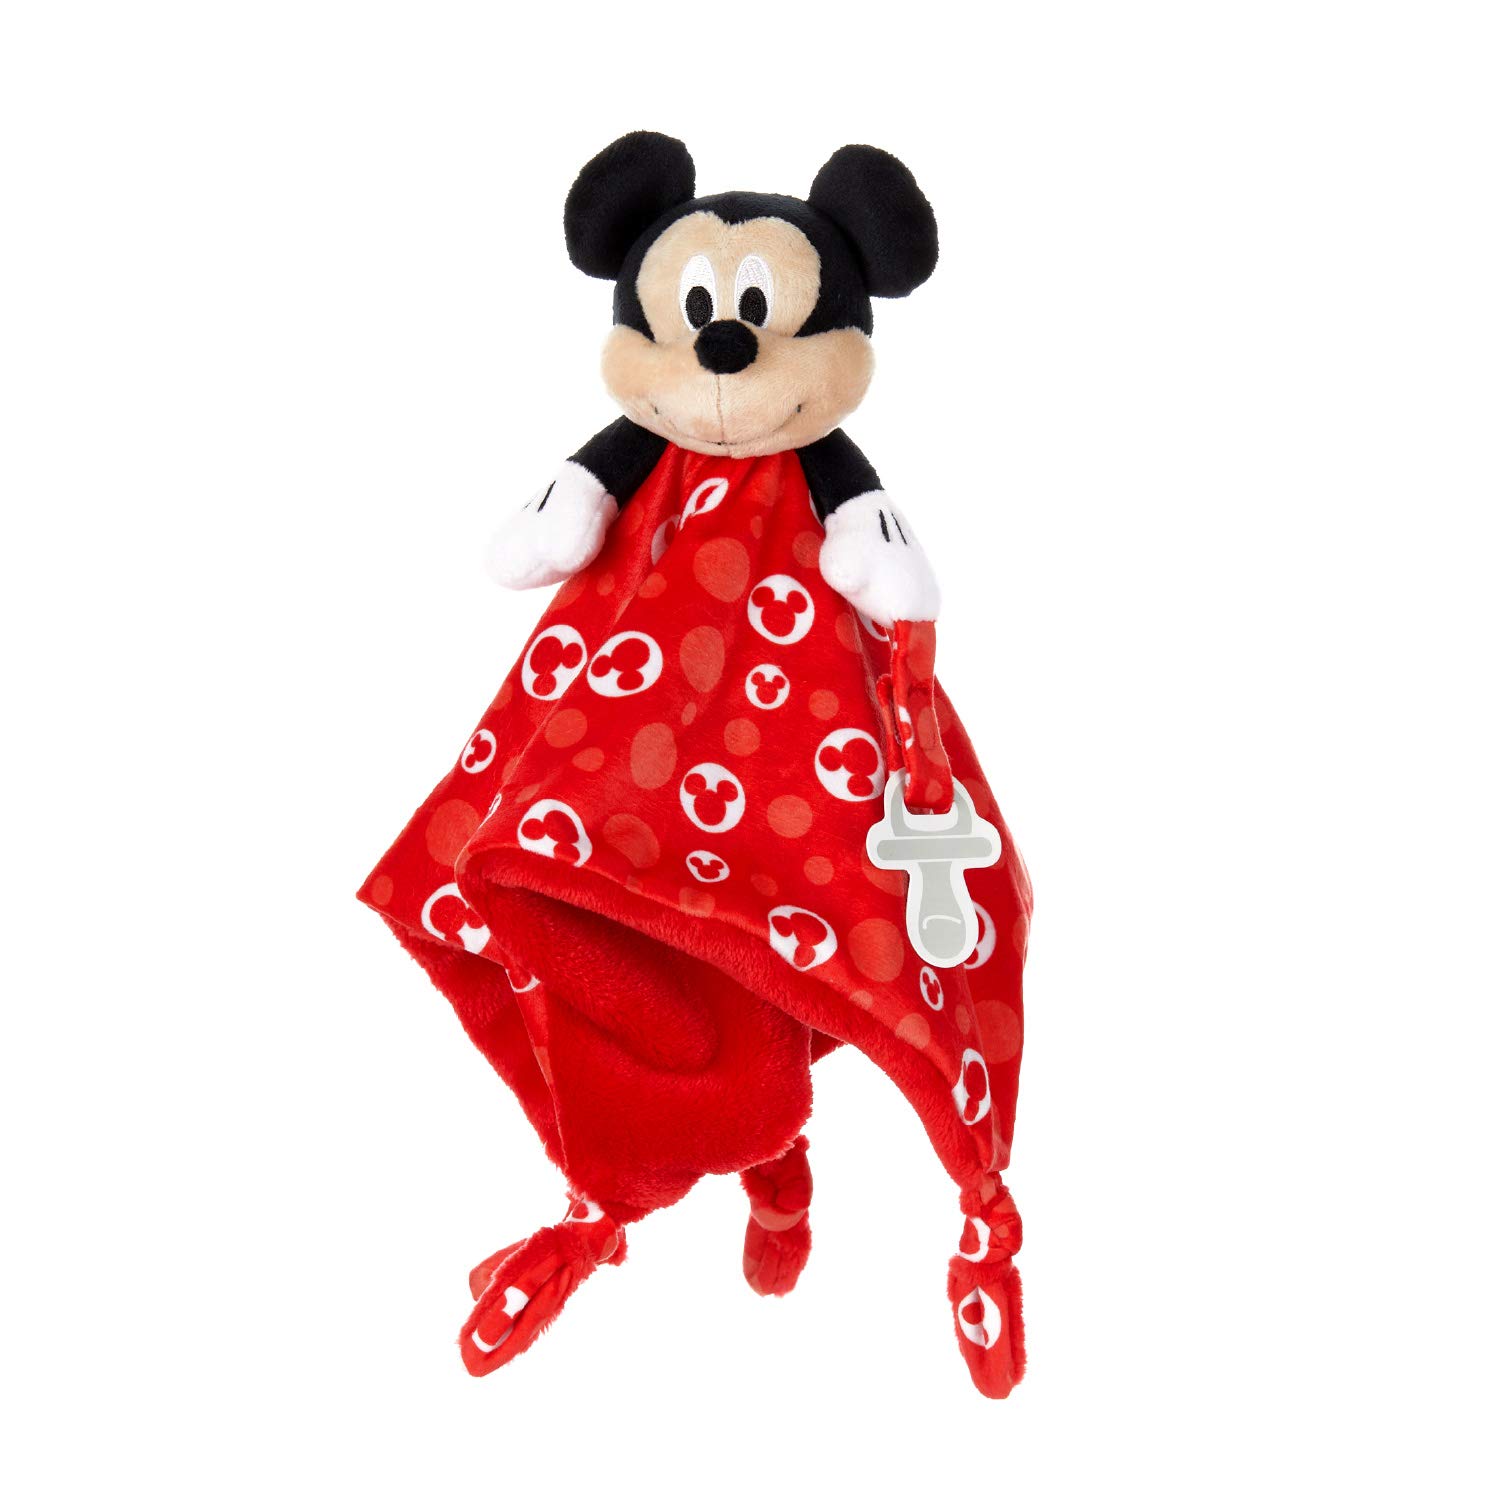 KIDS PREFERRED Disney Baby Mickey Mouse Plush Stuffed Animal Snuggler Lovey Security Blanket 13.18